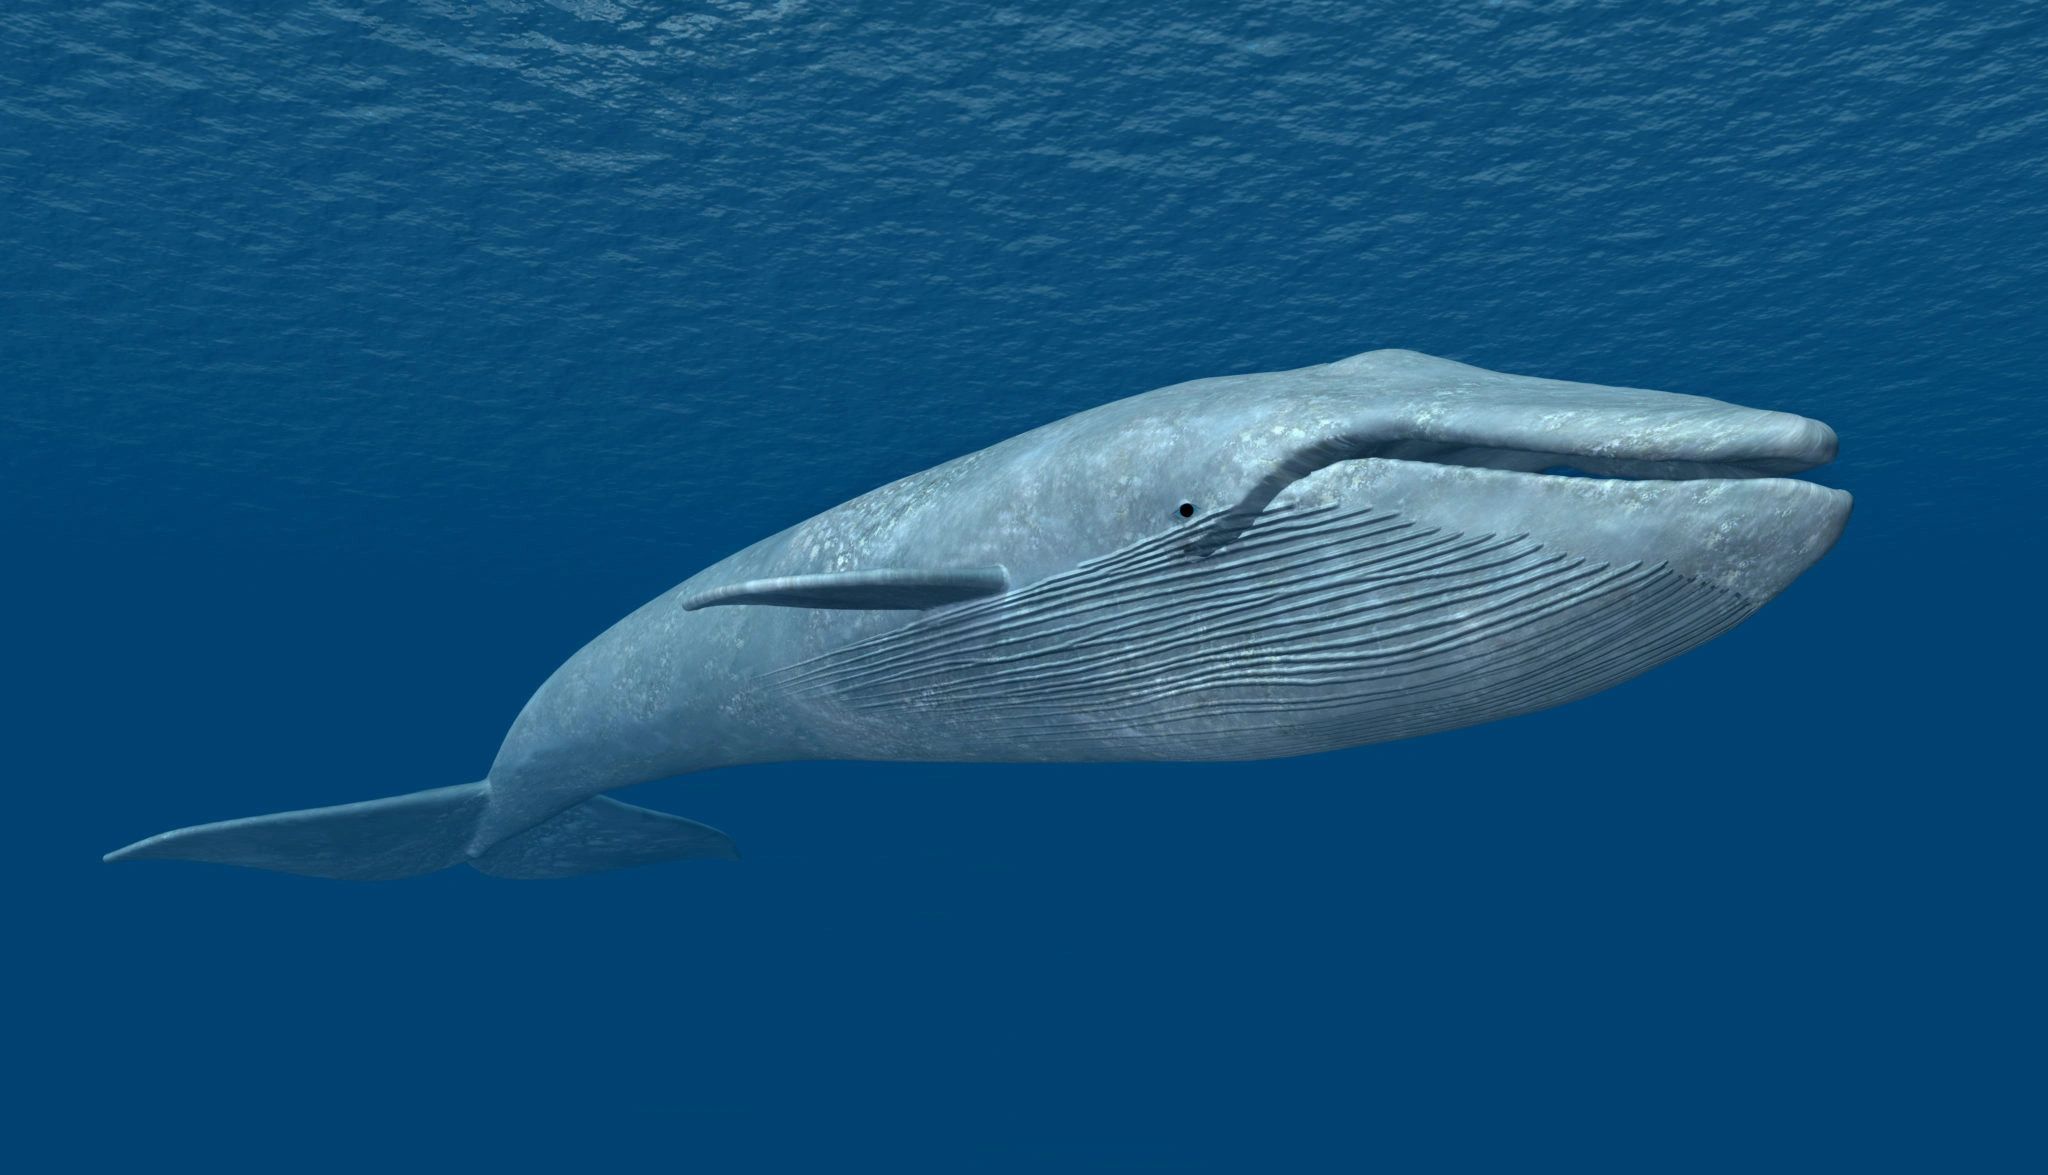 A beautiful whale